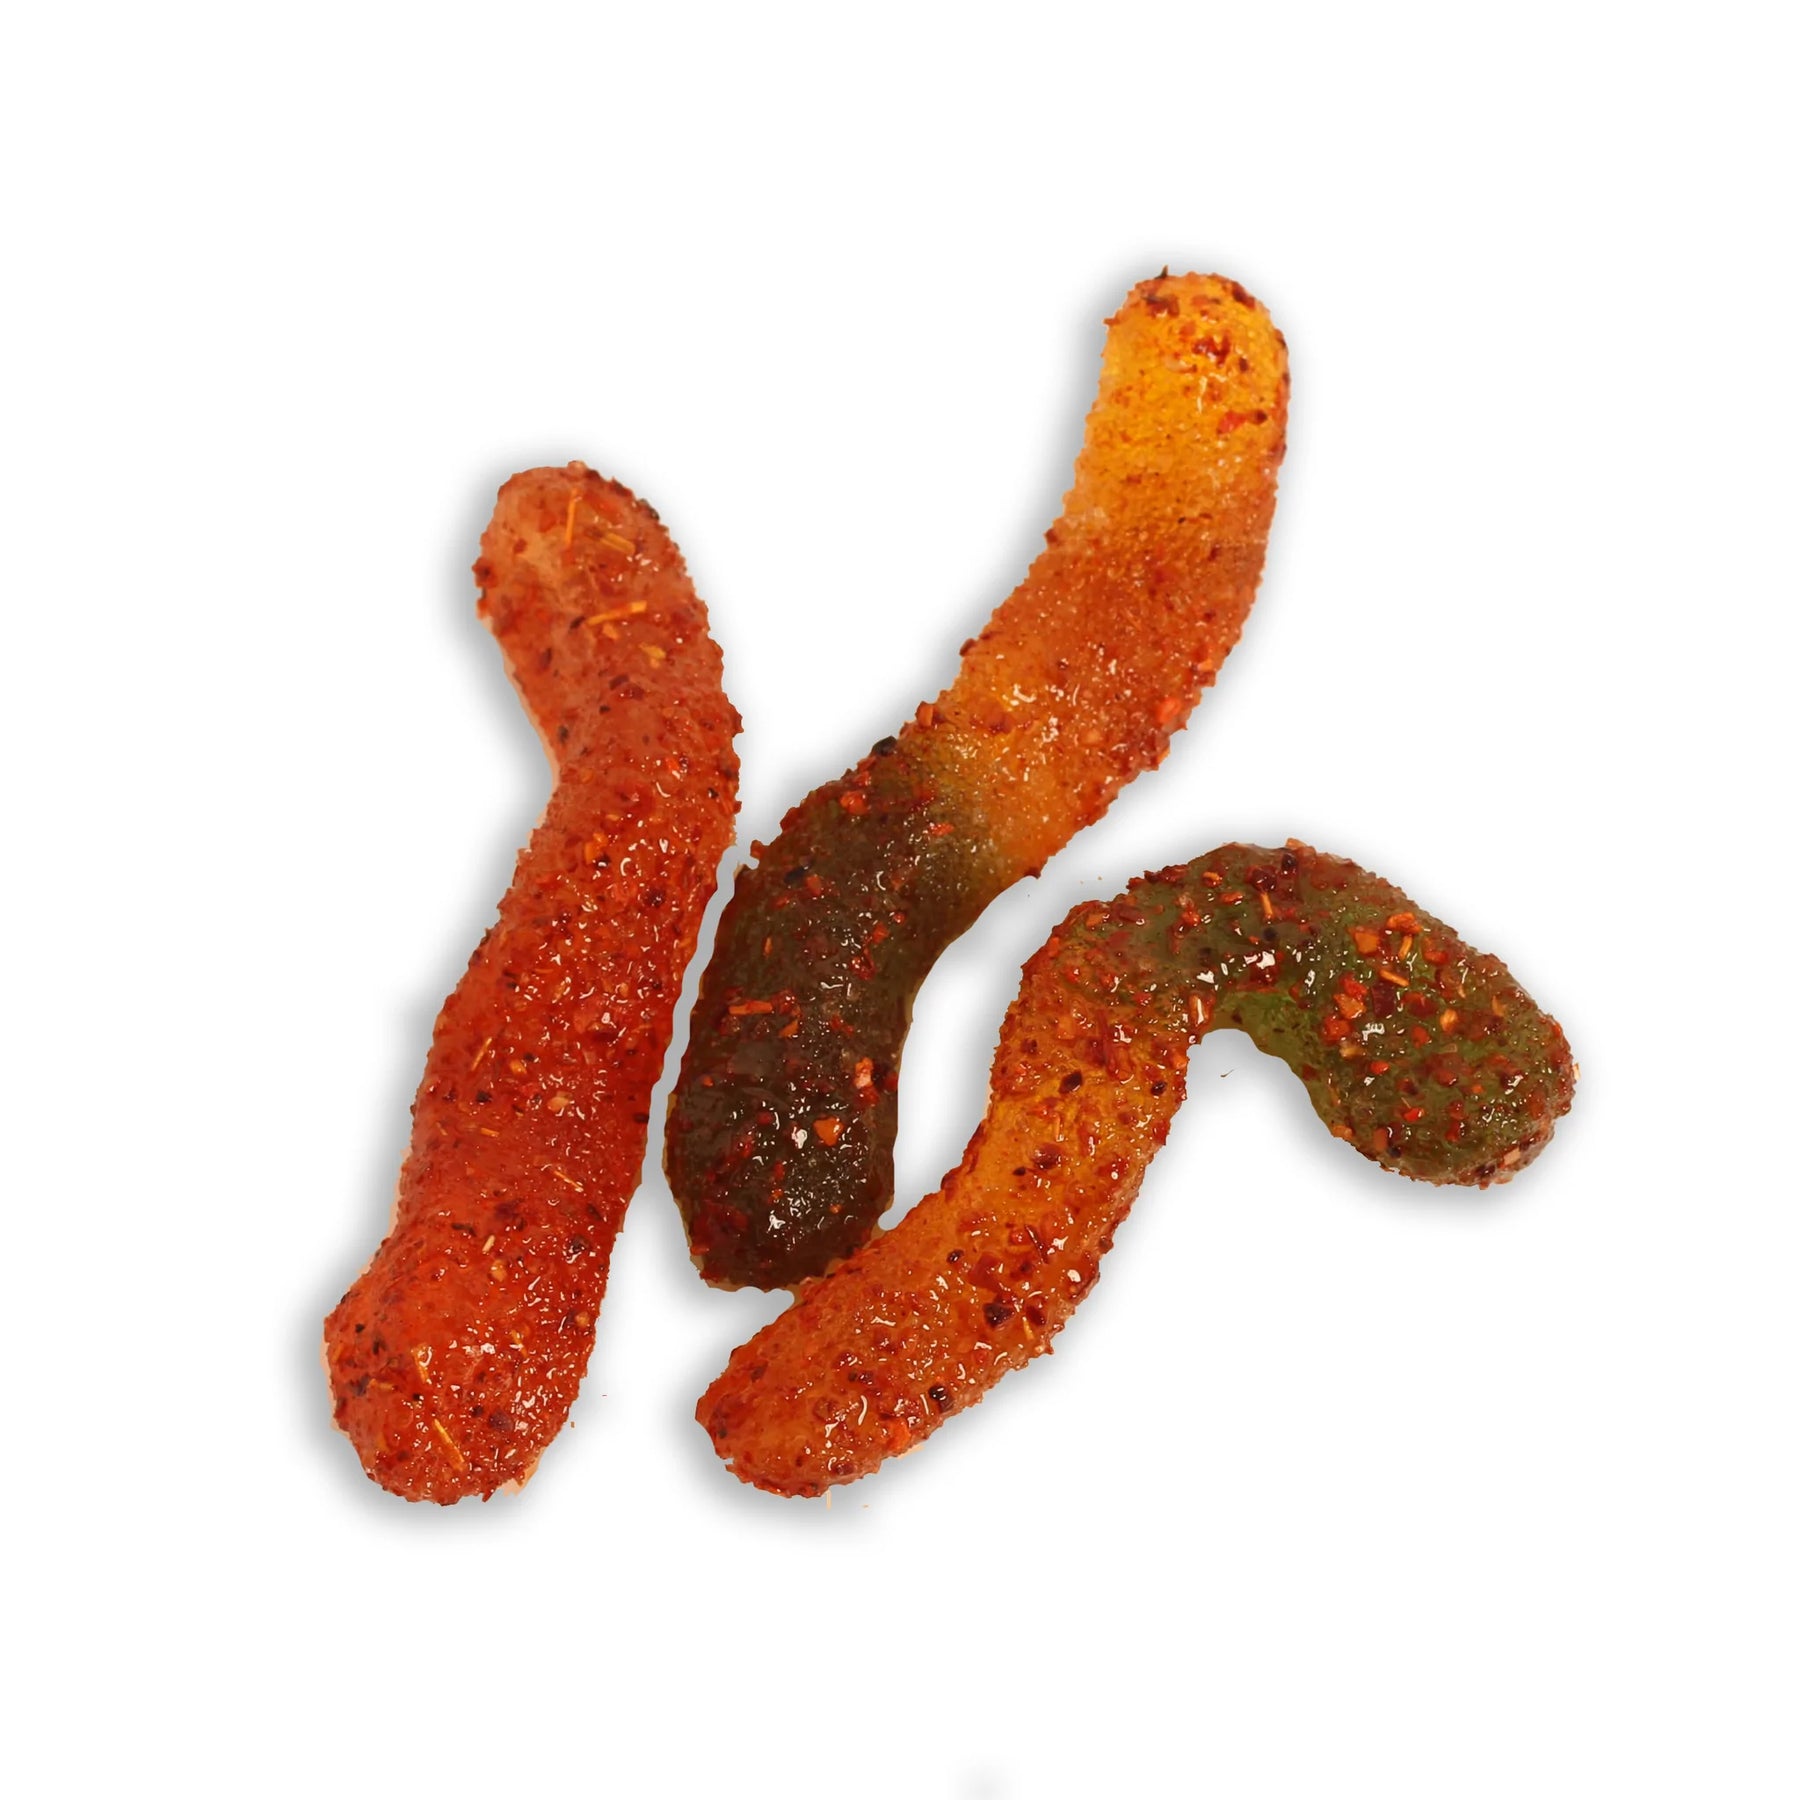 Chilli Bomba Spicy Gummy Worms Chamoy Candy - 8oz